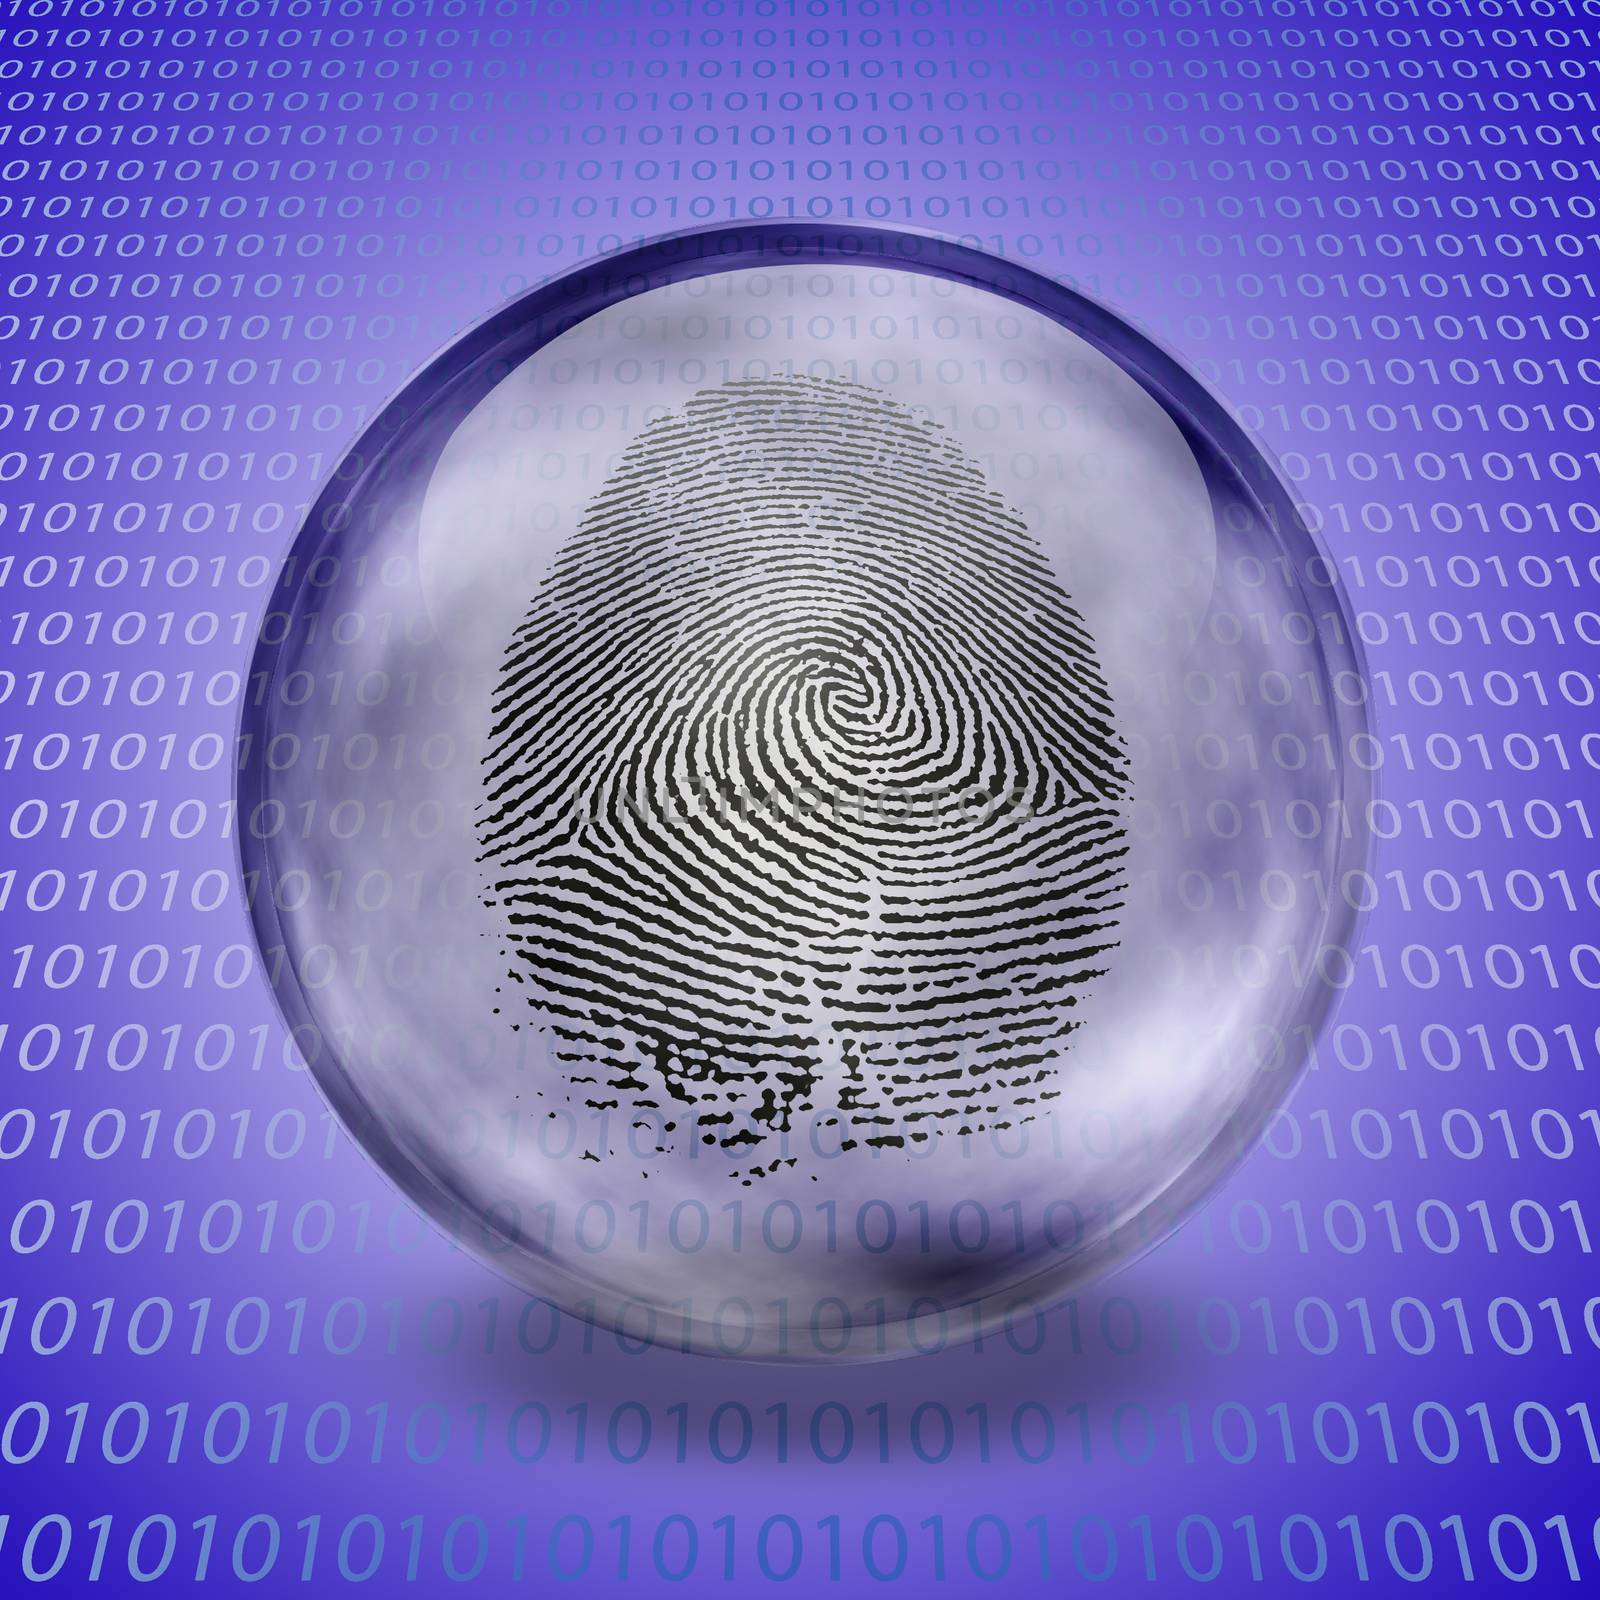 Fingerprint and binary code by applesstock